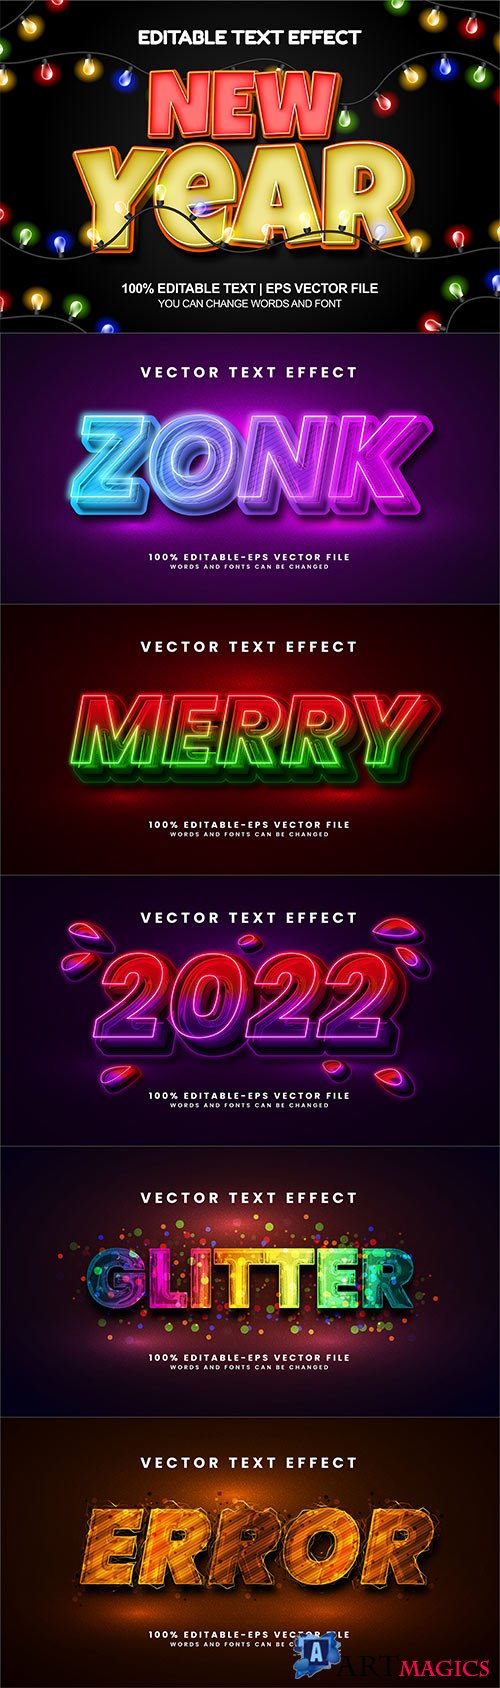 Set 3d editable text style effect vector vol 310